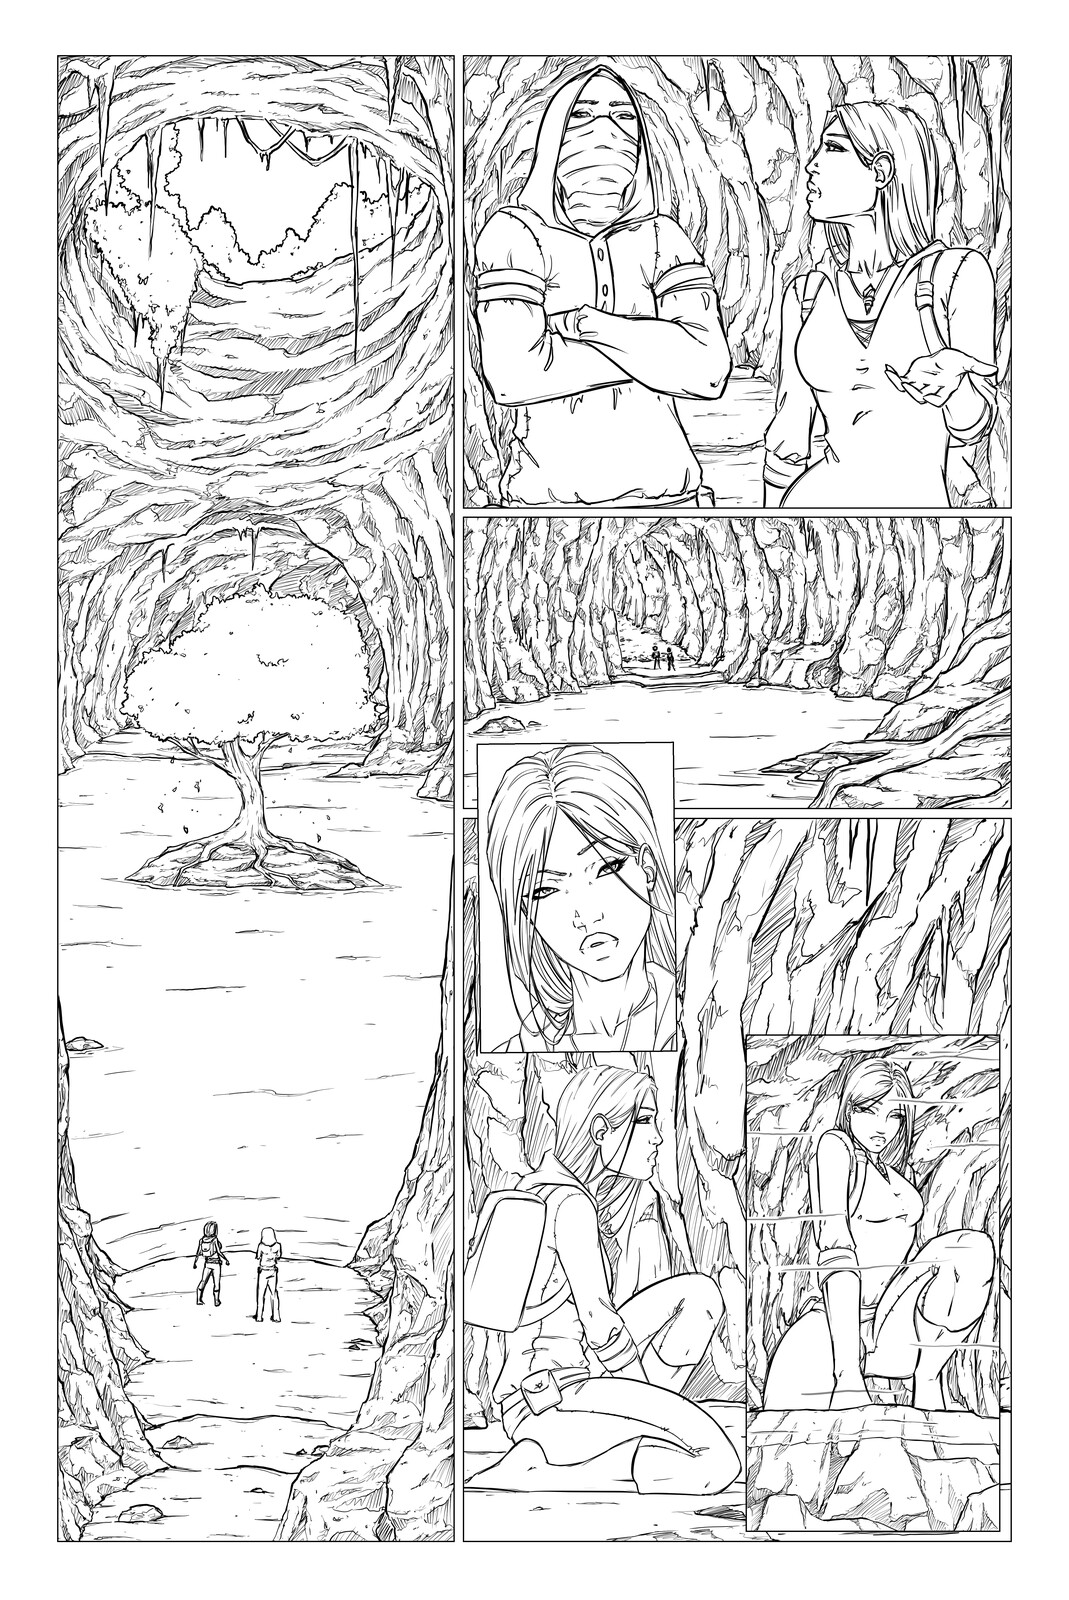 Page 7 - Line art